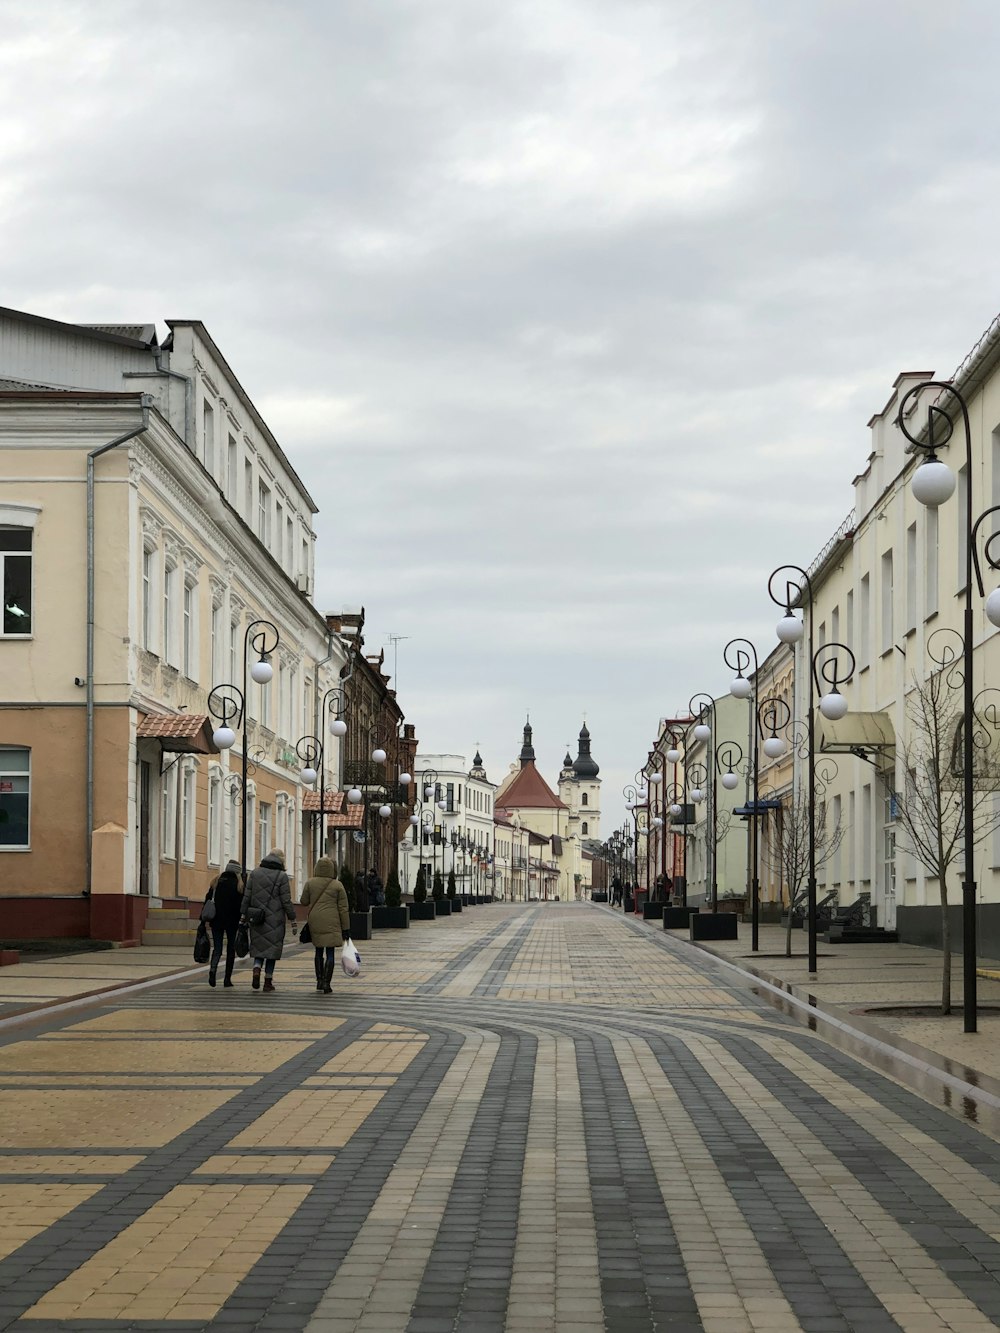 people walking on street near buildings during daytime